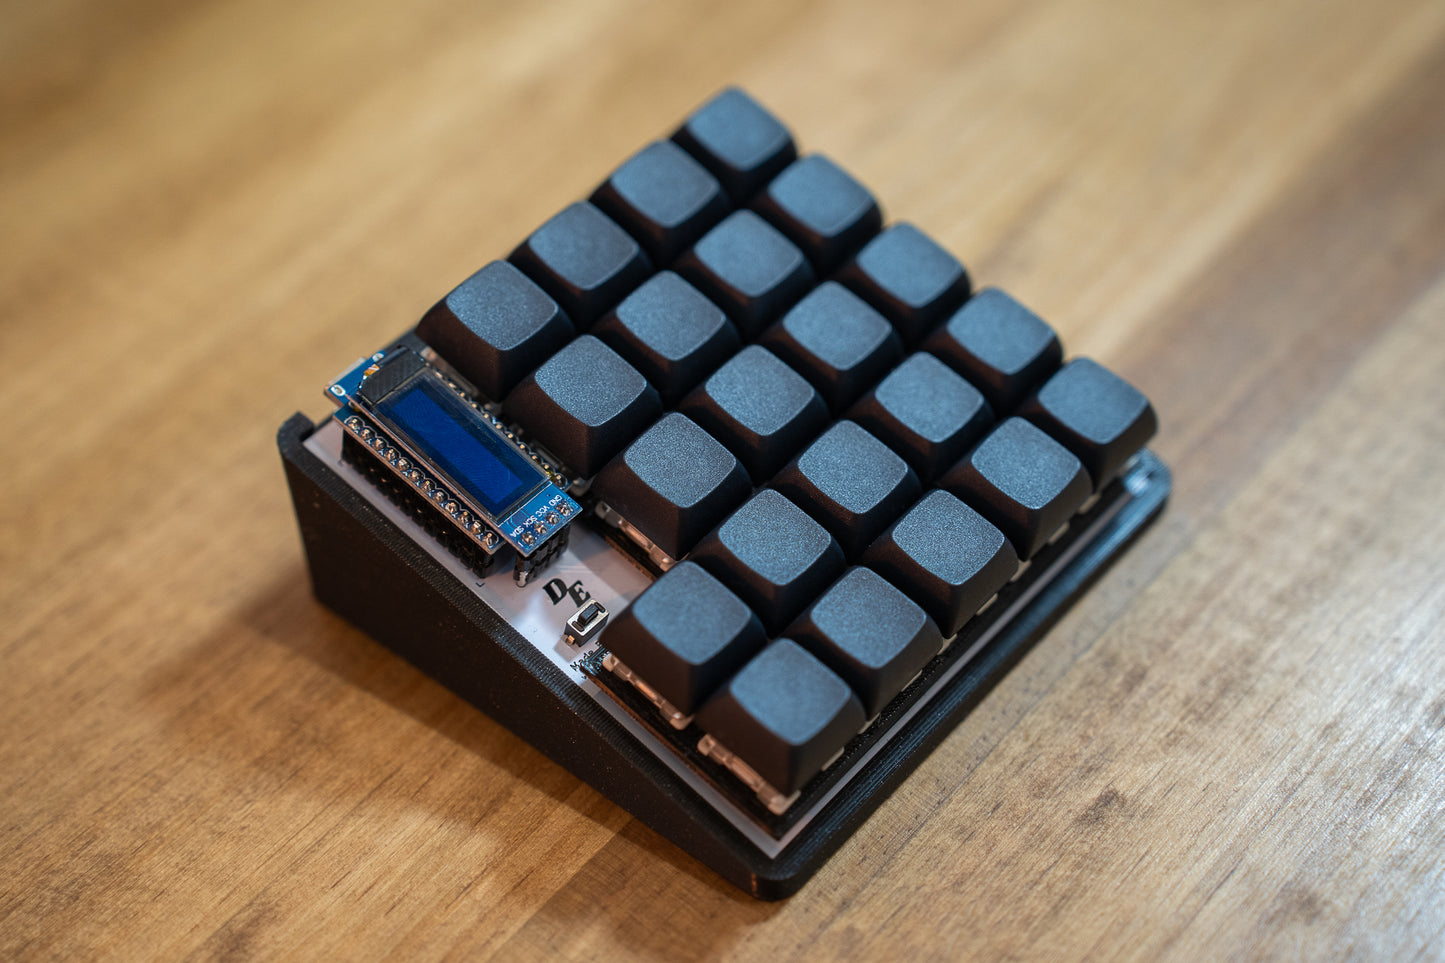 Demacro Macro Pad QMK/VIA Compatible With Retro Blue Keycaps